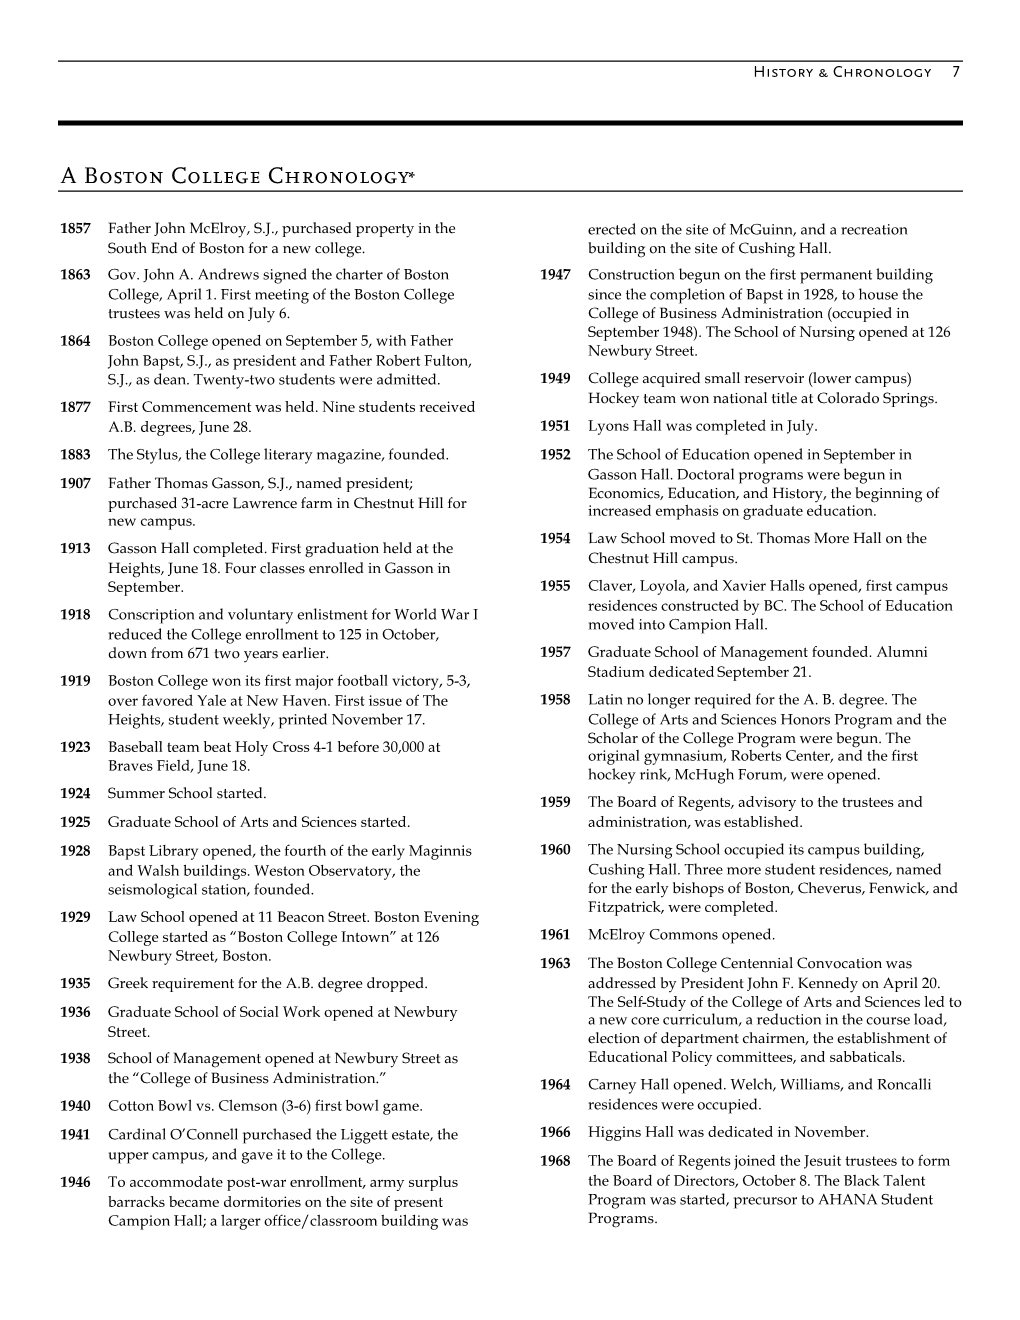 A Boston College Chronology*